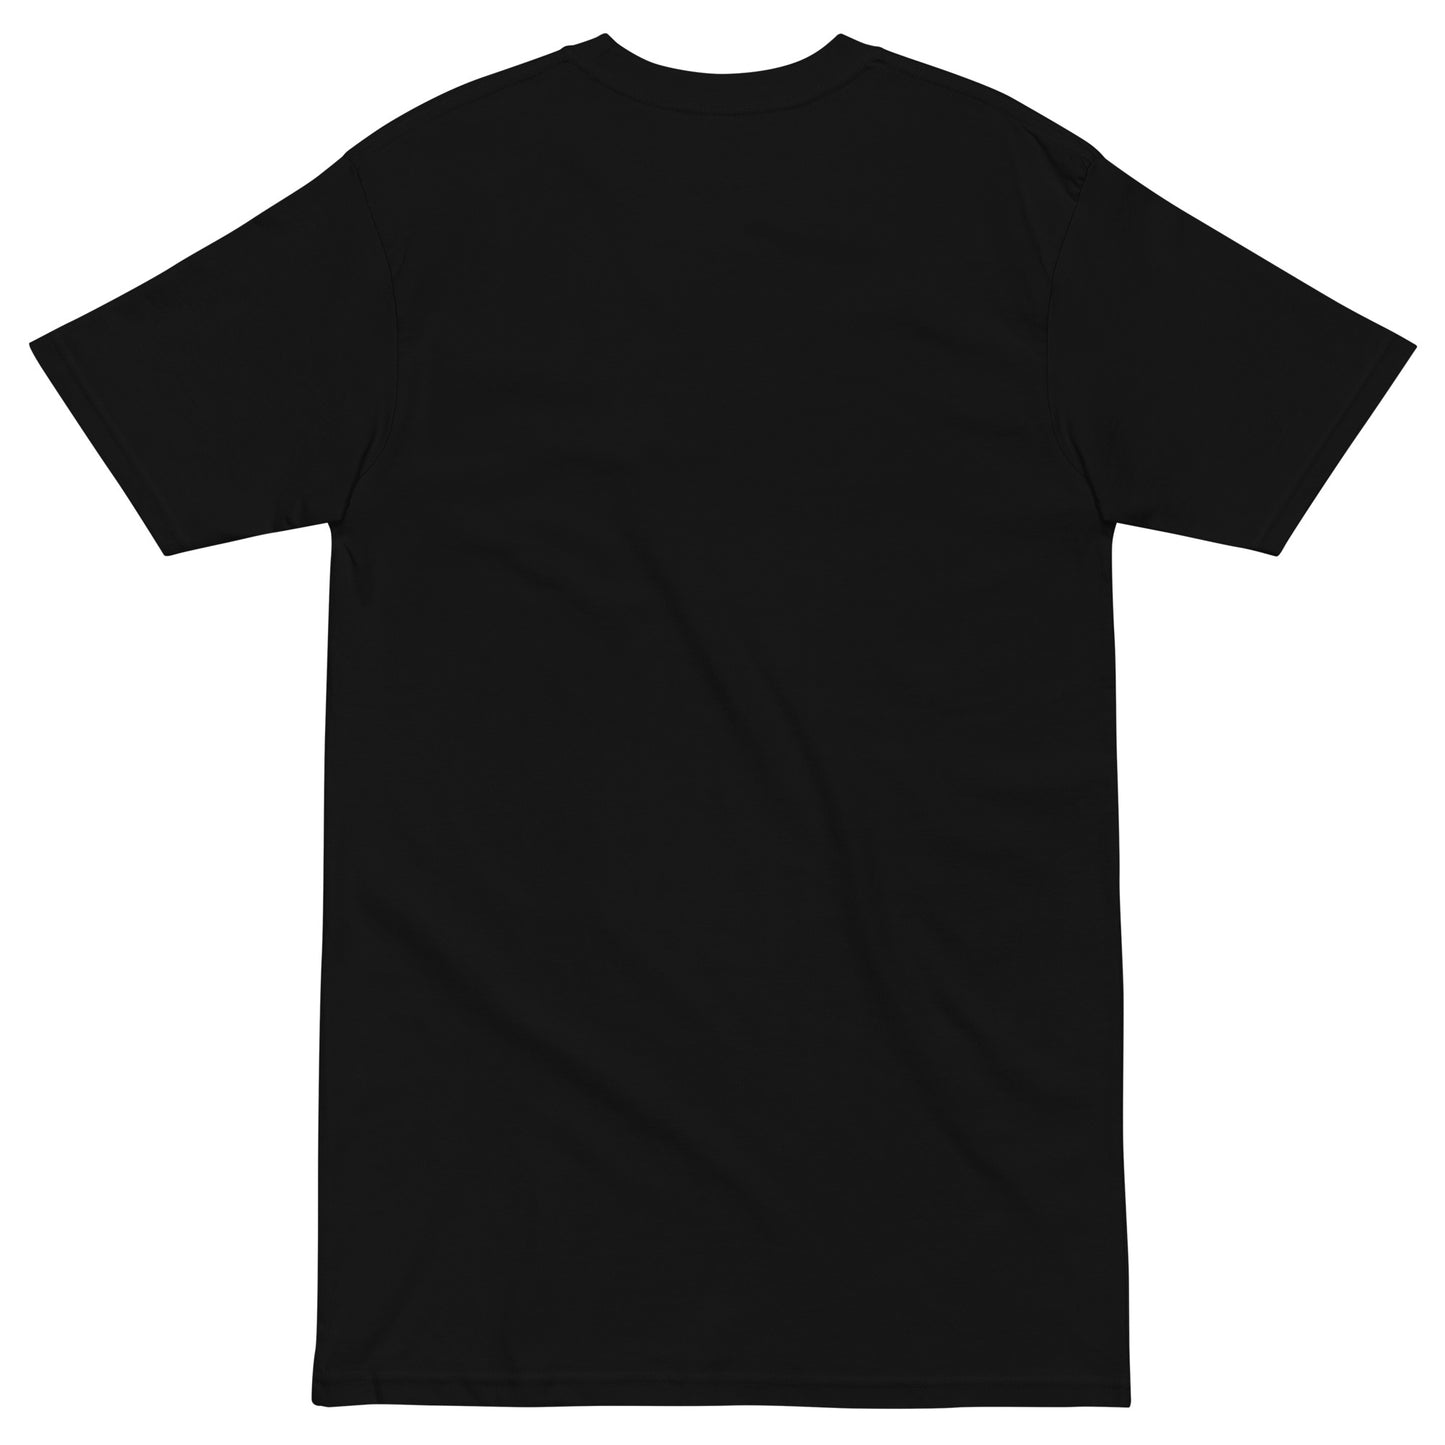 Printed Large Center Unisex Premium Heavyweight Tee / T-shirt "Beach" - Black Edition